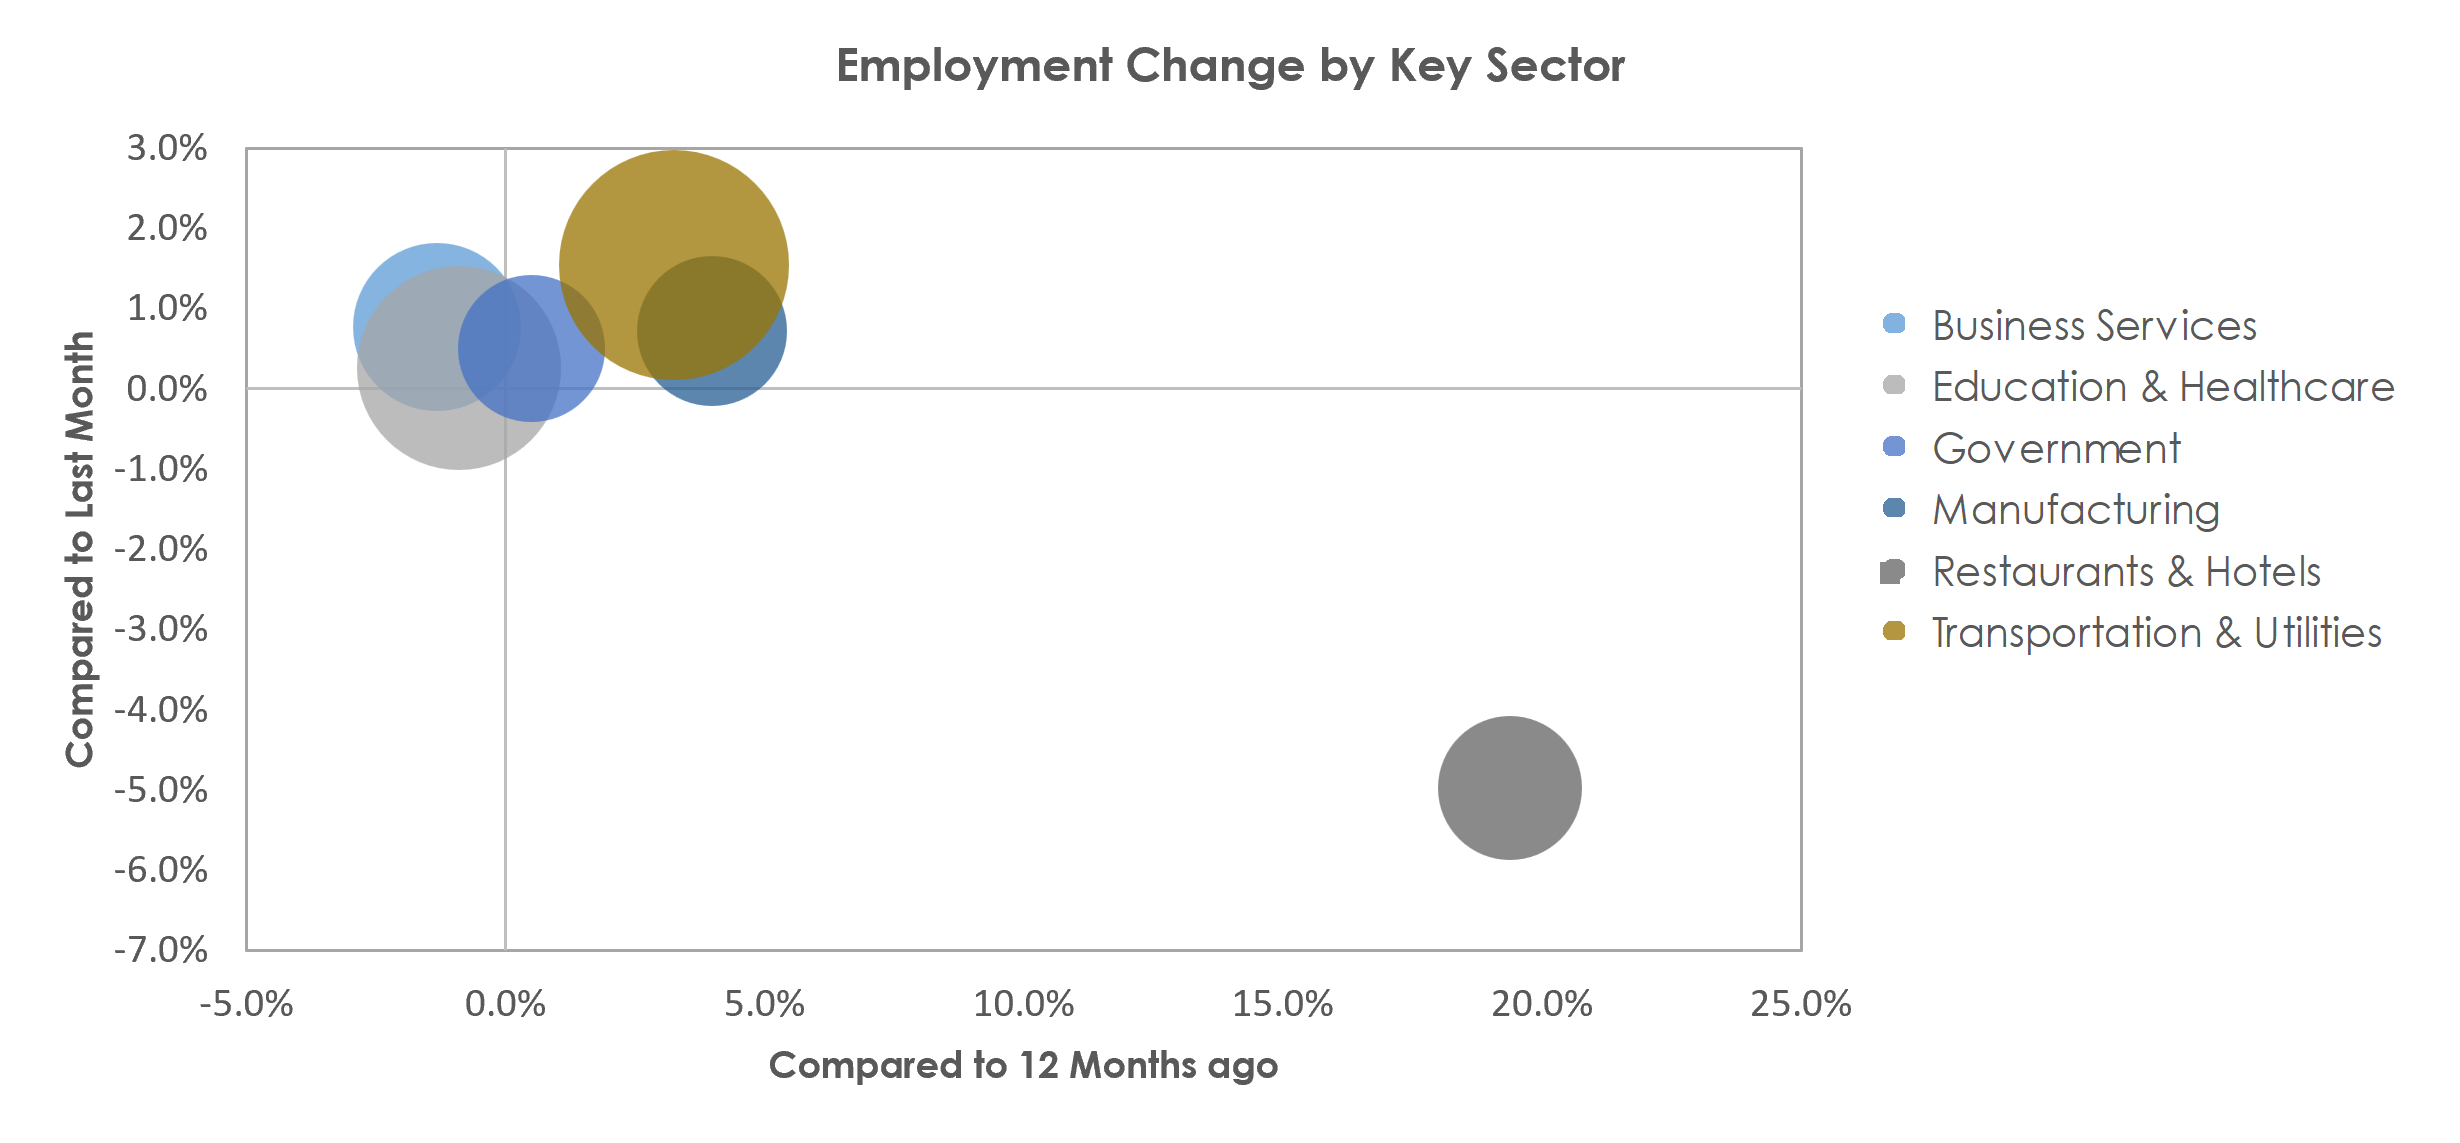 Allentown-Bethlehem-Easton, PA-NJ Unemployment by Industry November 2022